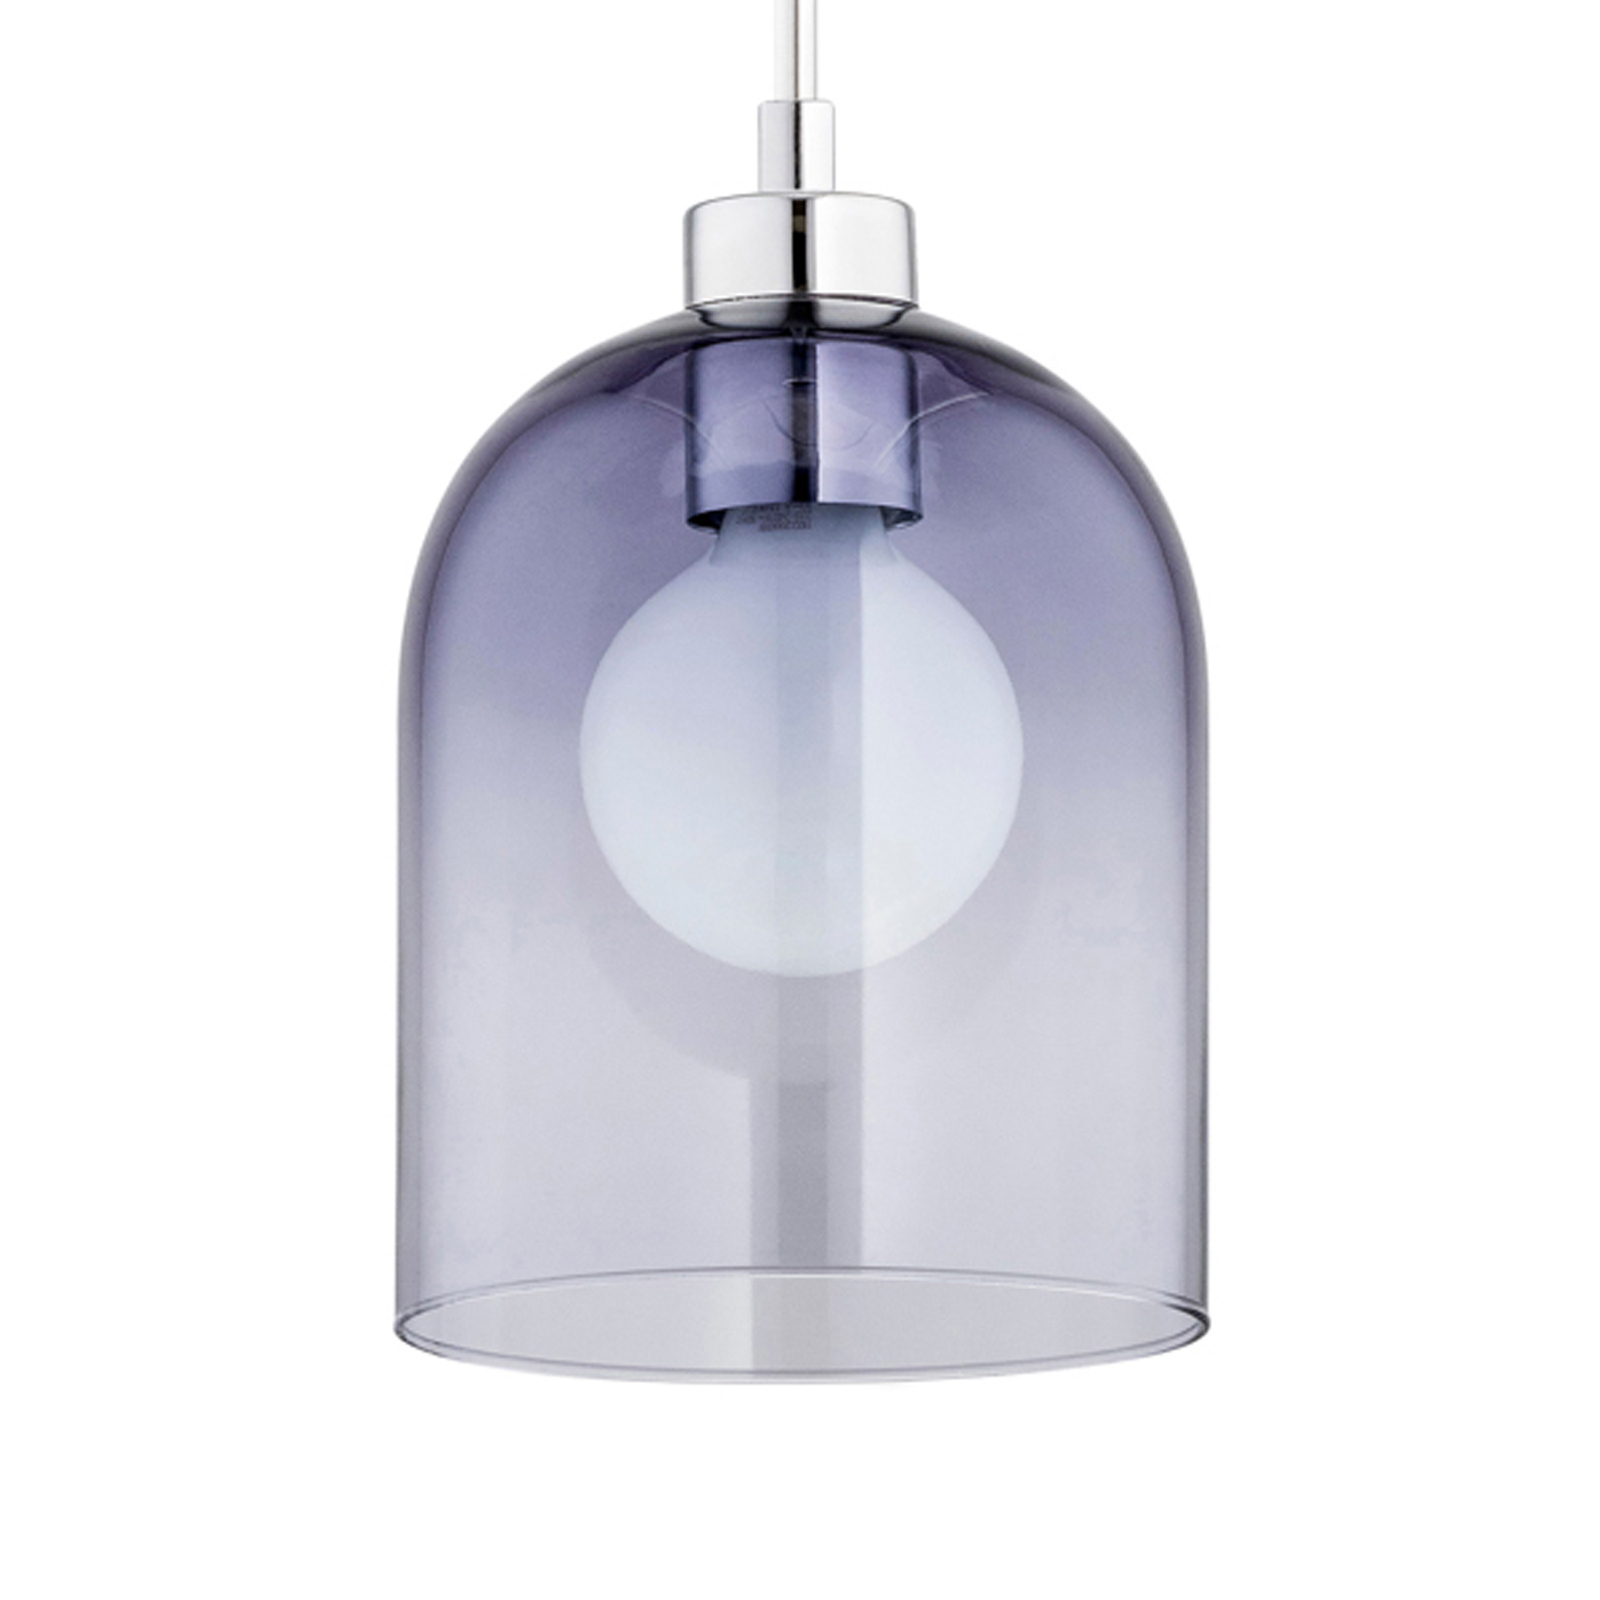 Rona pendant light, one-bulb, smoky grey